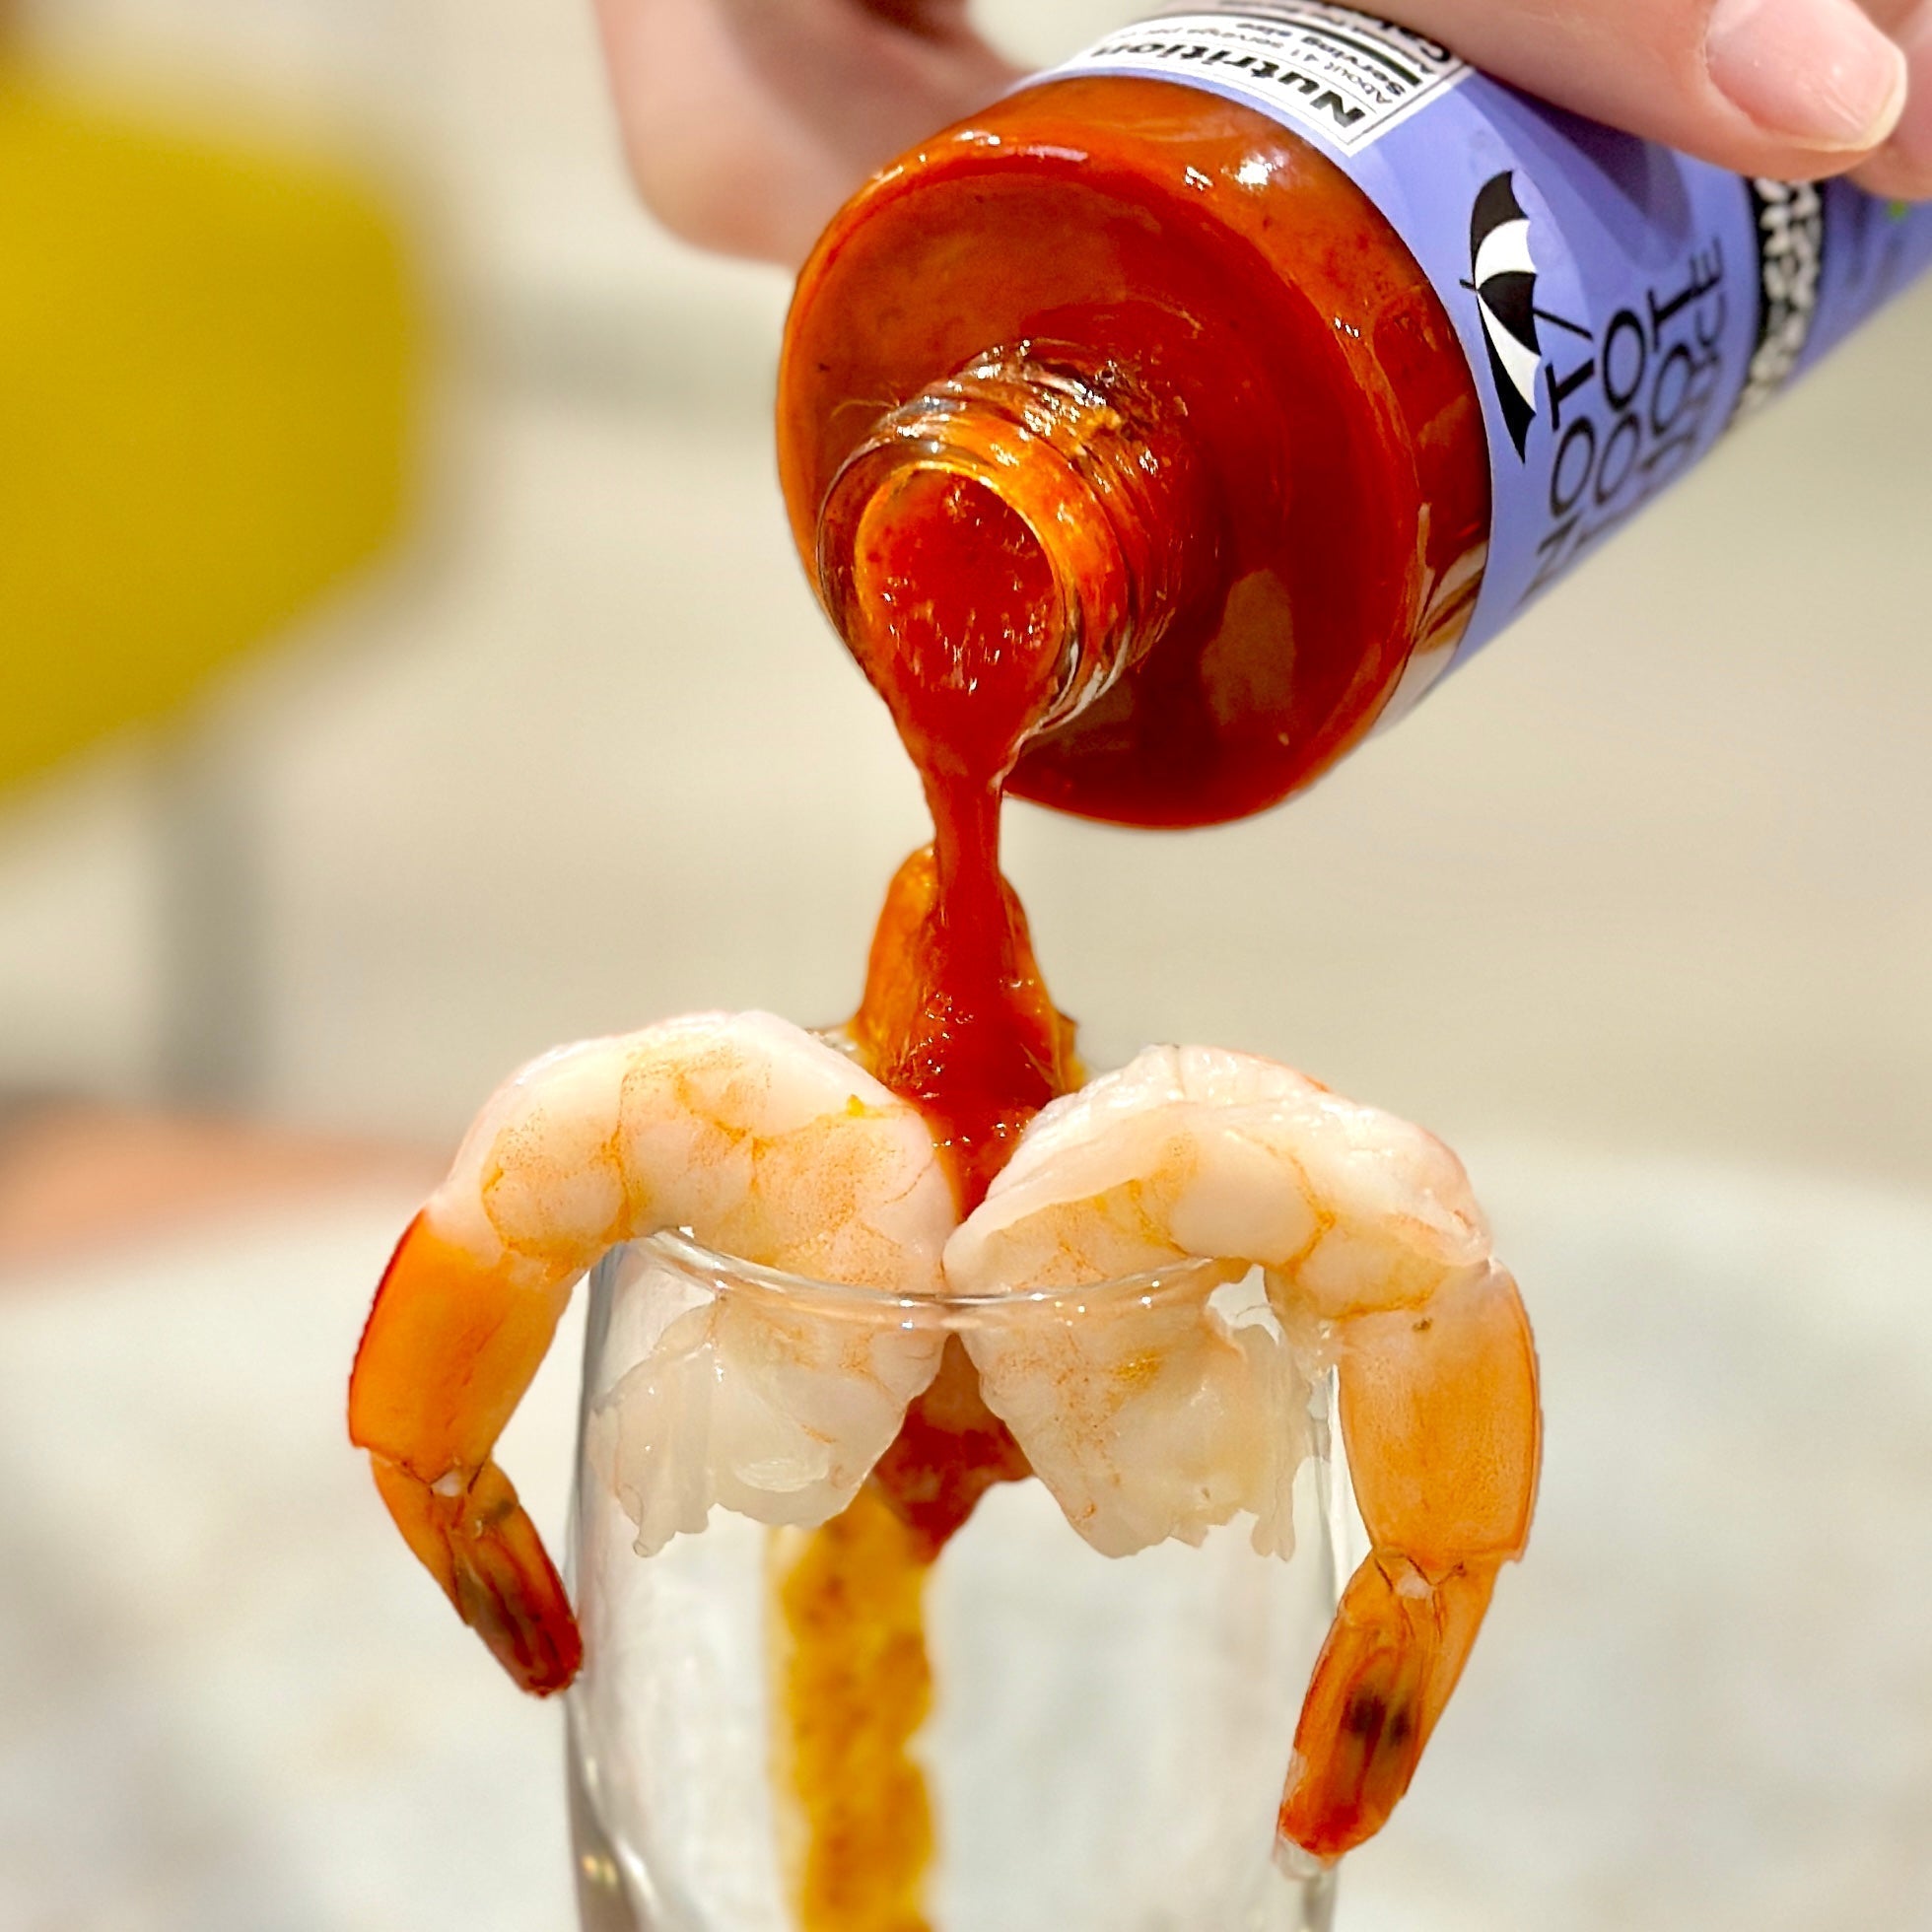 Cha-Cha-Sriracha 7 oz. Sriracha Hot Sauce - Try for $2! Not Too Hot Sauce